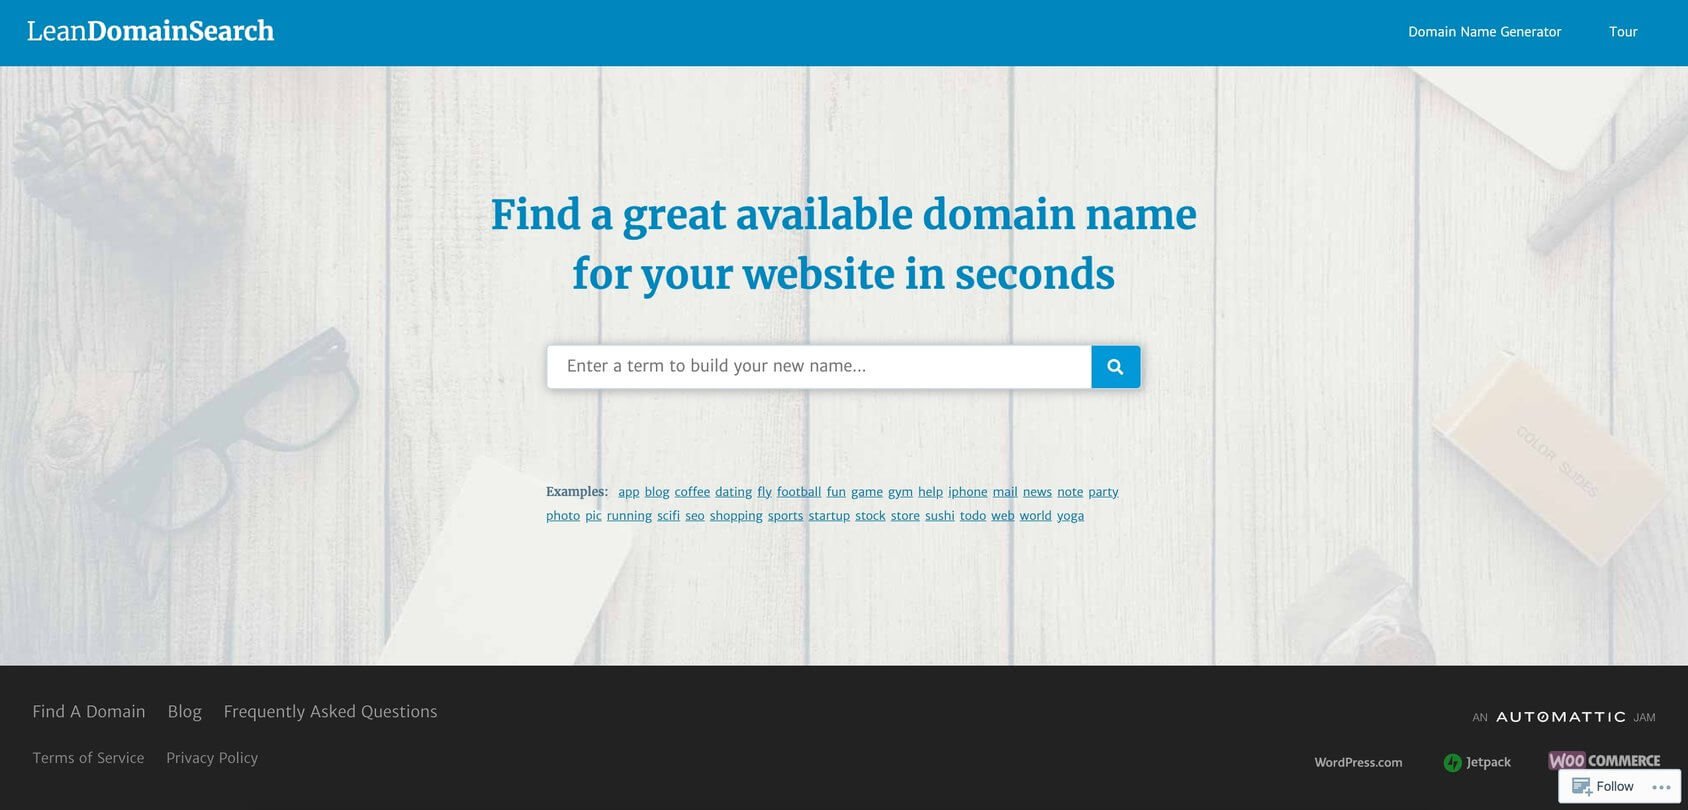 Lean Domain Search homepage